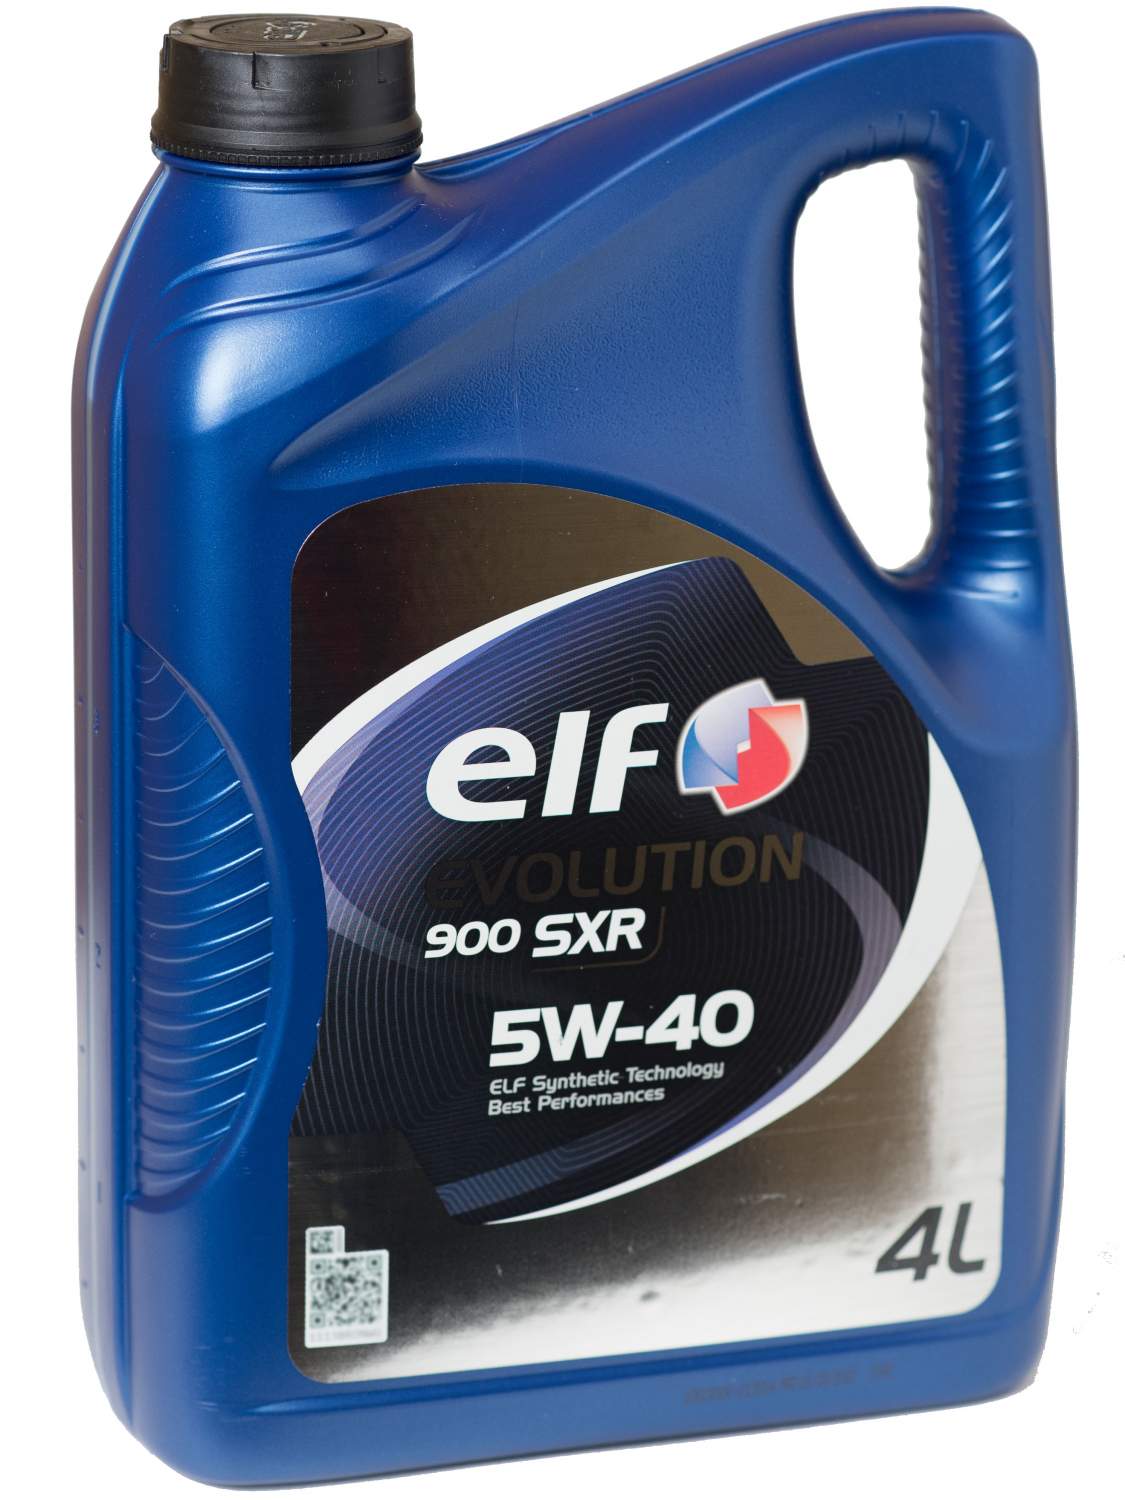 Масло ELF 5W30 4L 900 SXR Evolution 